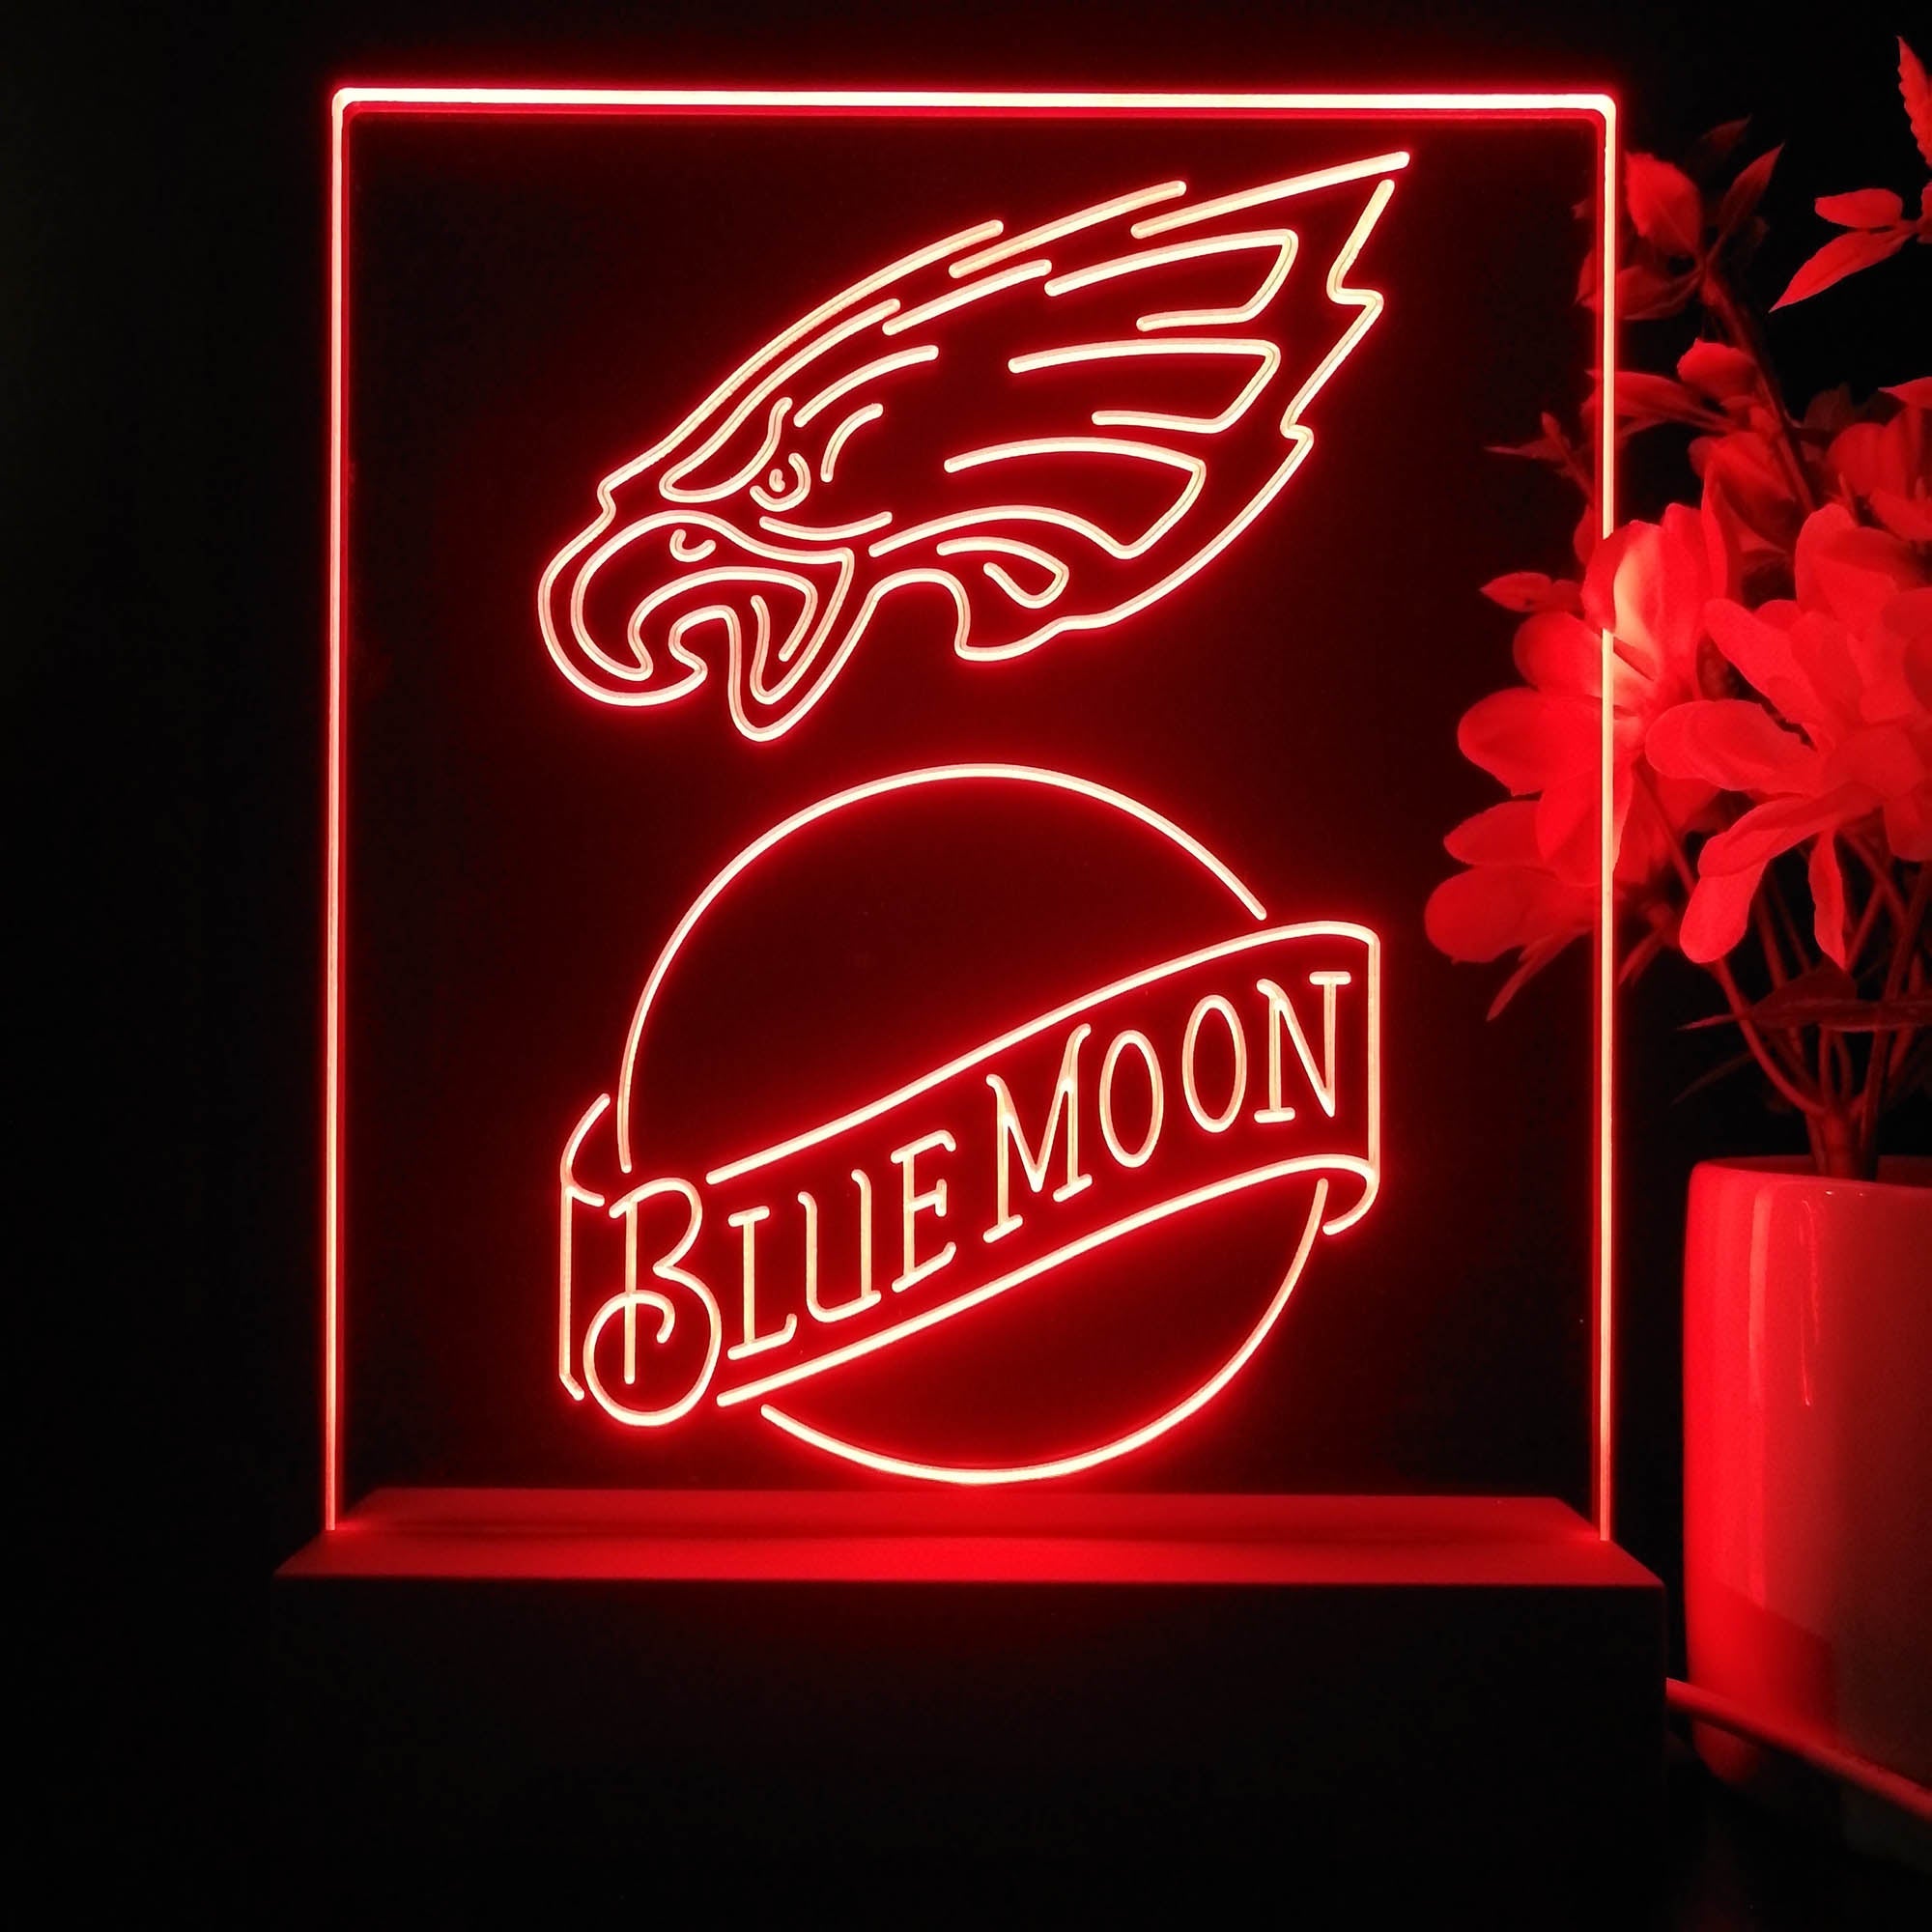 Philadelphia Eagles Blue Moon Neon Sign Pub Bar Lamp